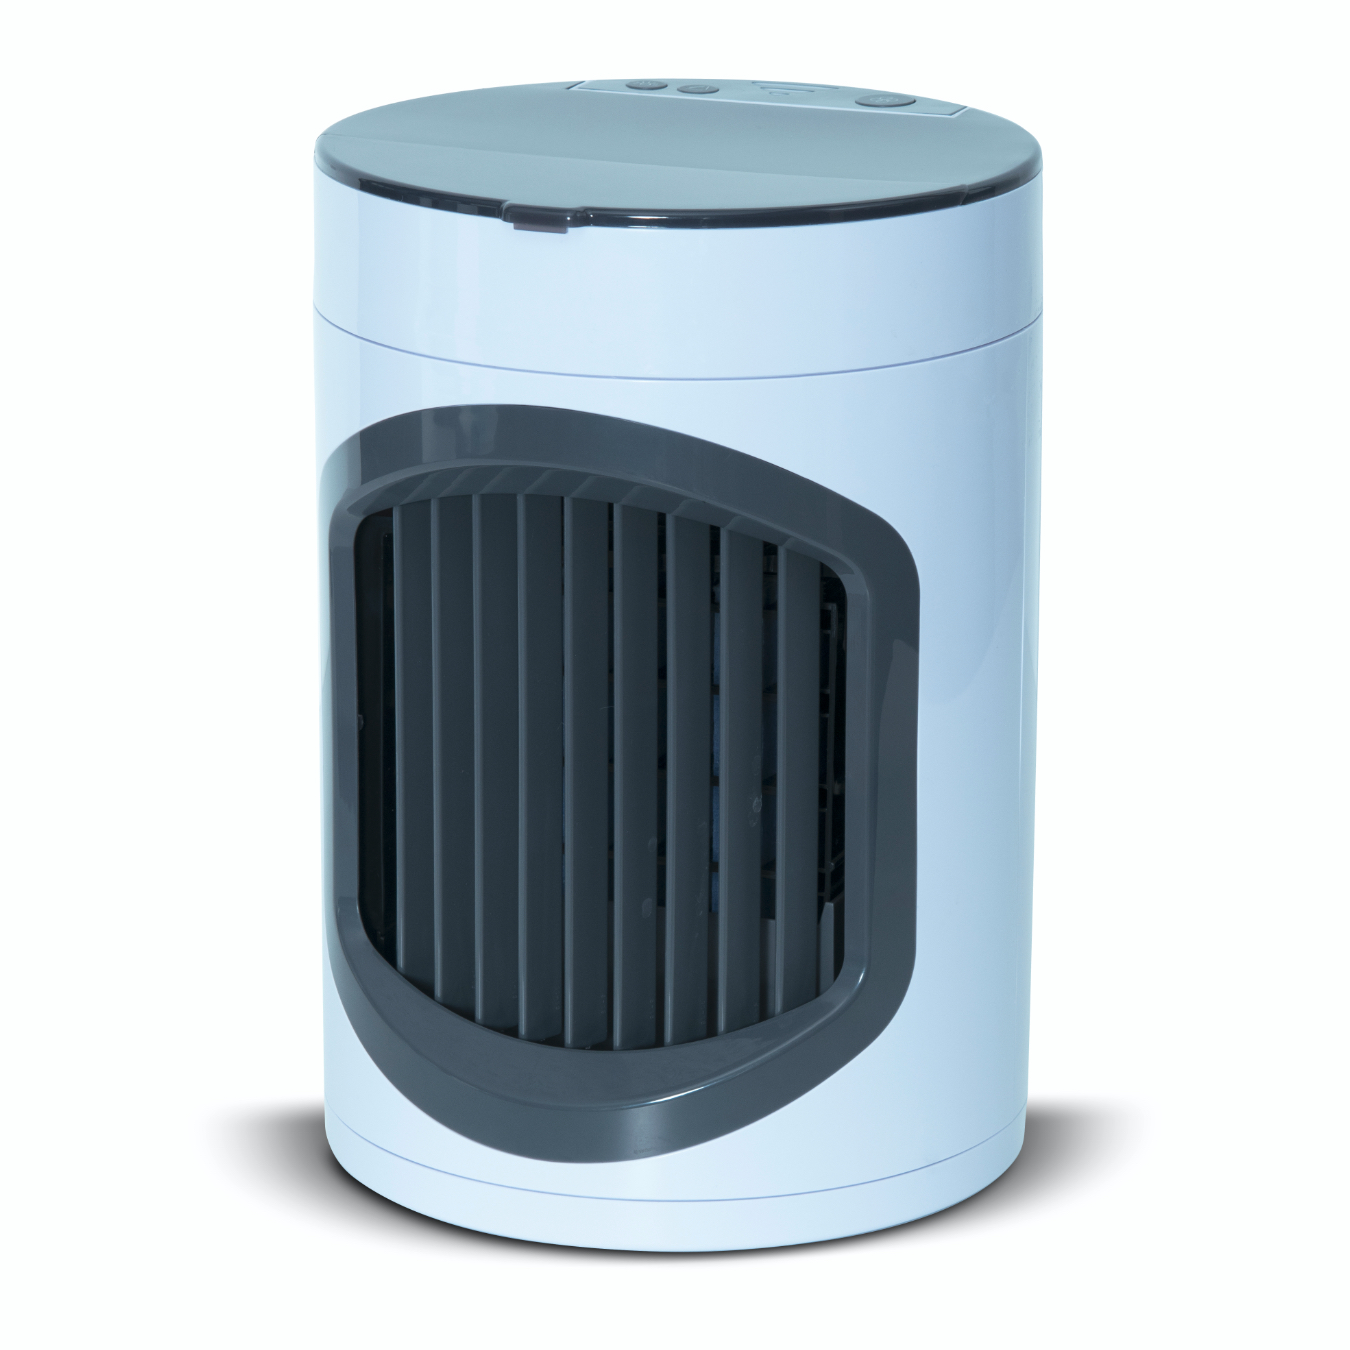 View SmartAir Desktop Tower Fan Air Purifier Includes Automatic Pollutant Sensor High Street TV information